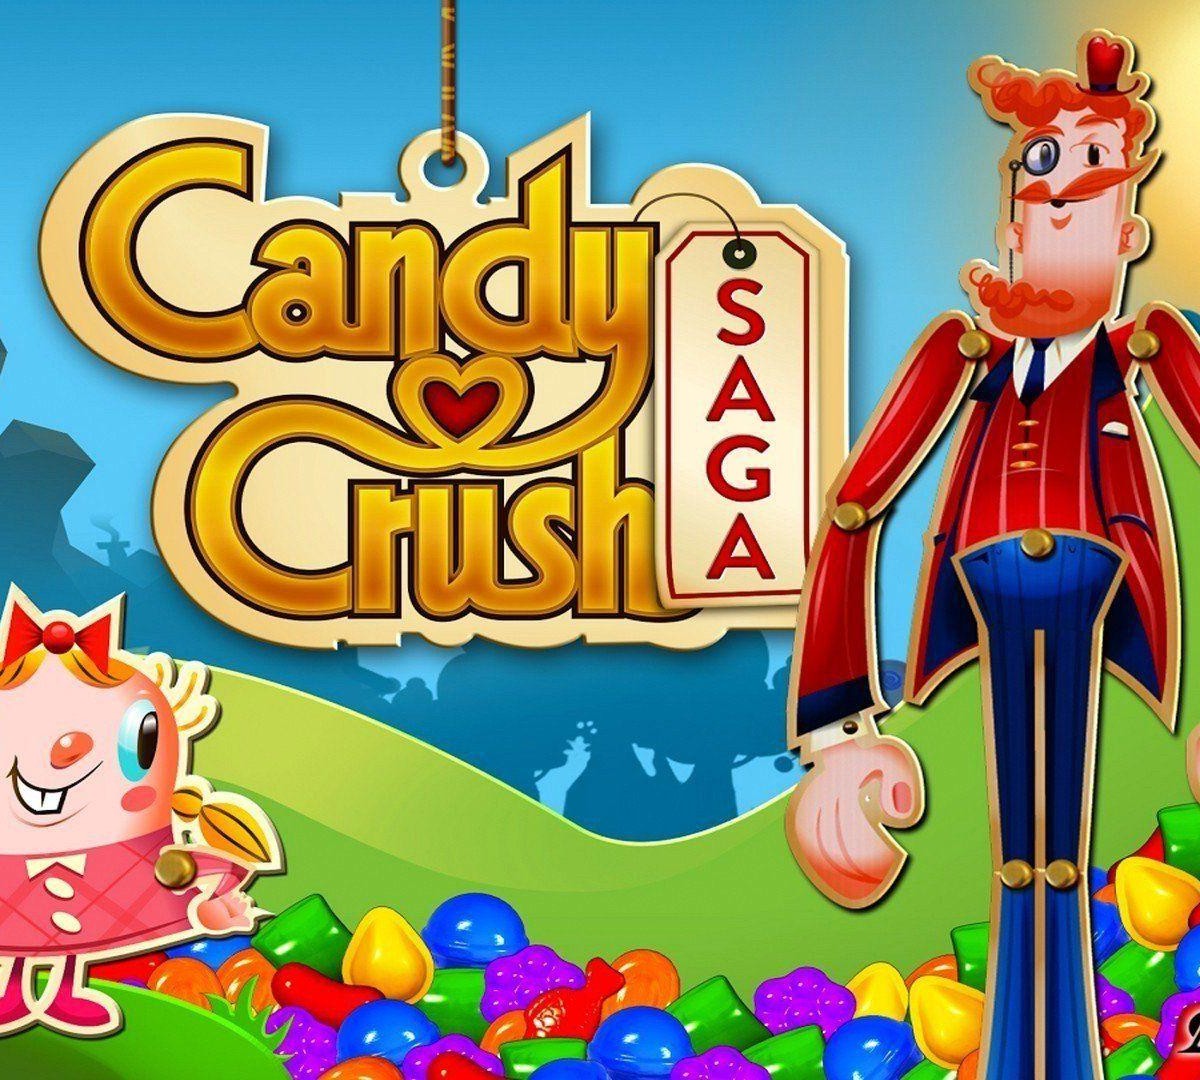 WinClub Games on X: Xbox começa a anunciar 'Candy Crush Saga